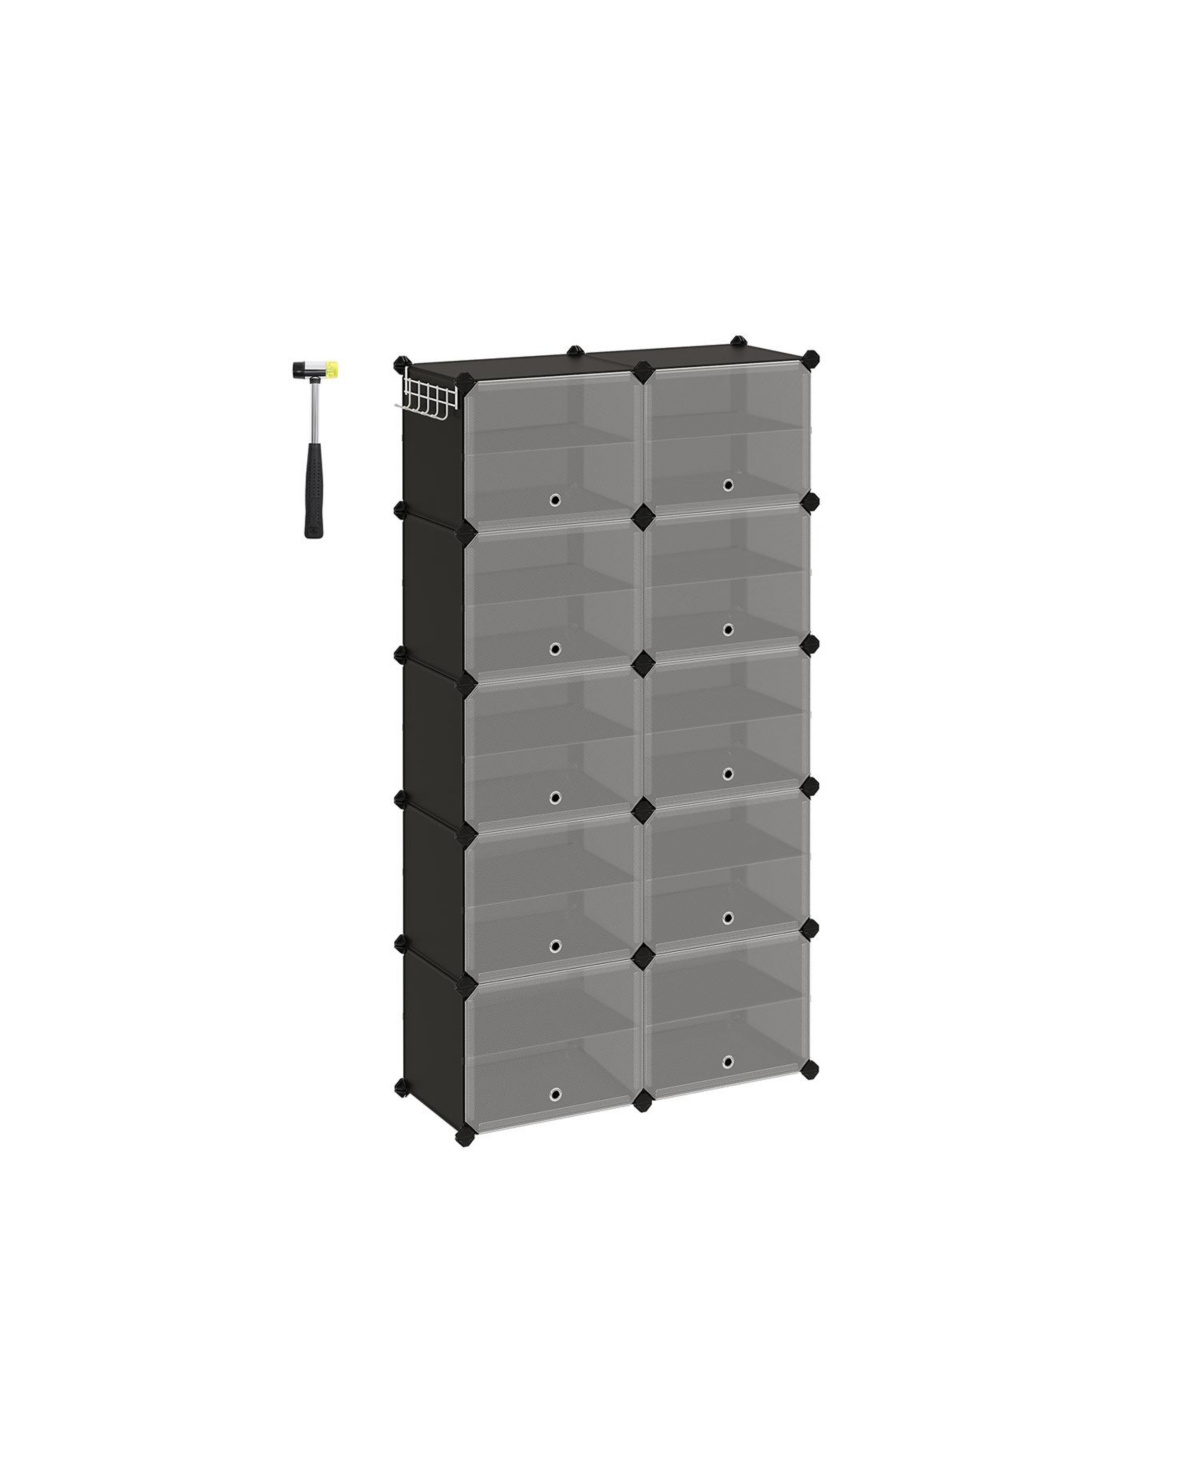 Interlocking Shoe Rack, Cubes Shoe Organizer with Doors, Plastic Shoe Storage Cabinet, 10 Cubes - Black